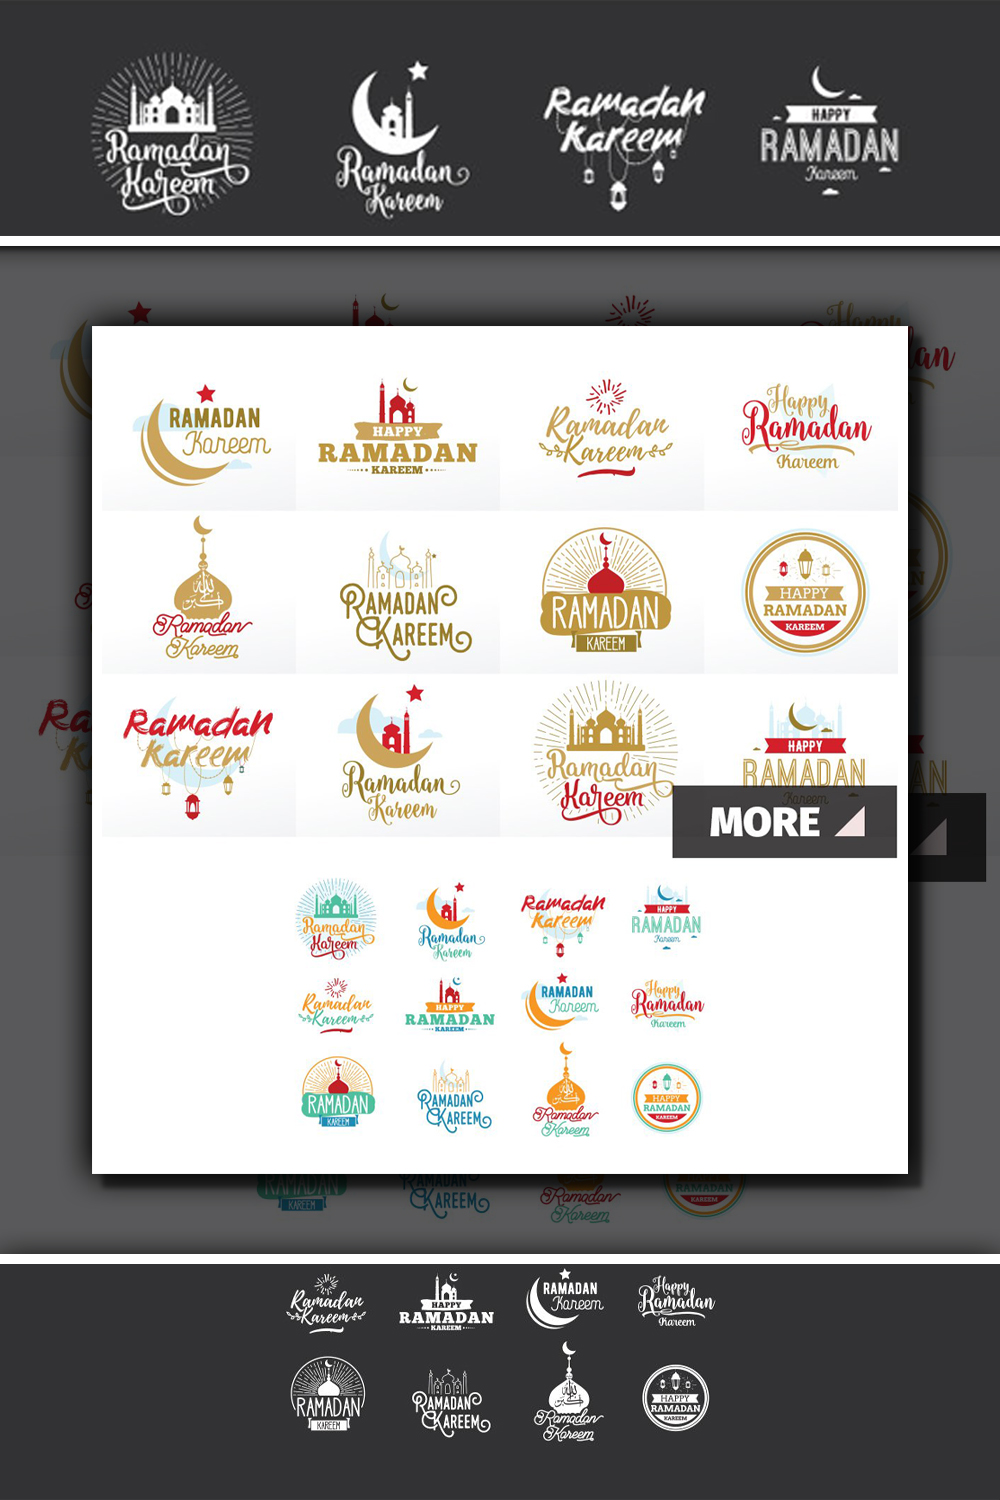 Ramadan kareem typographic set of pinterest.